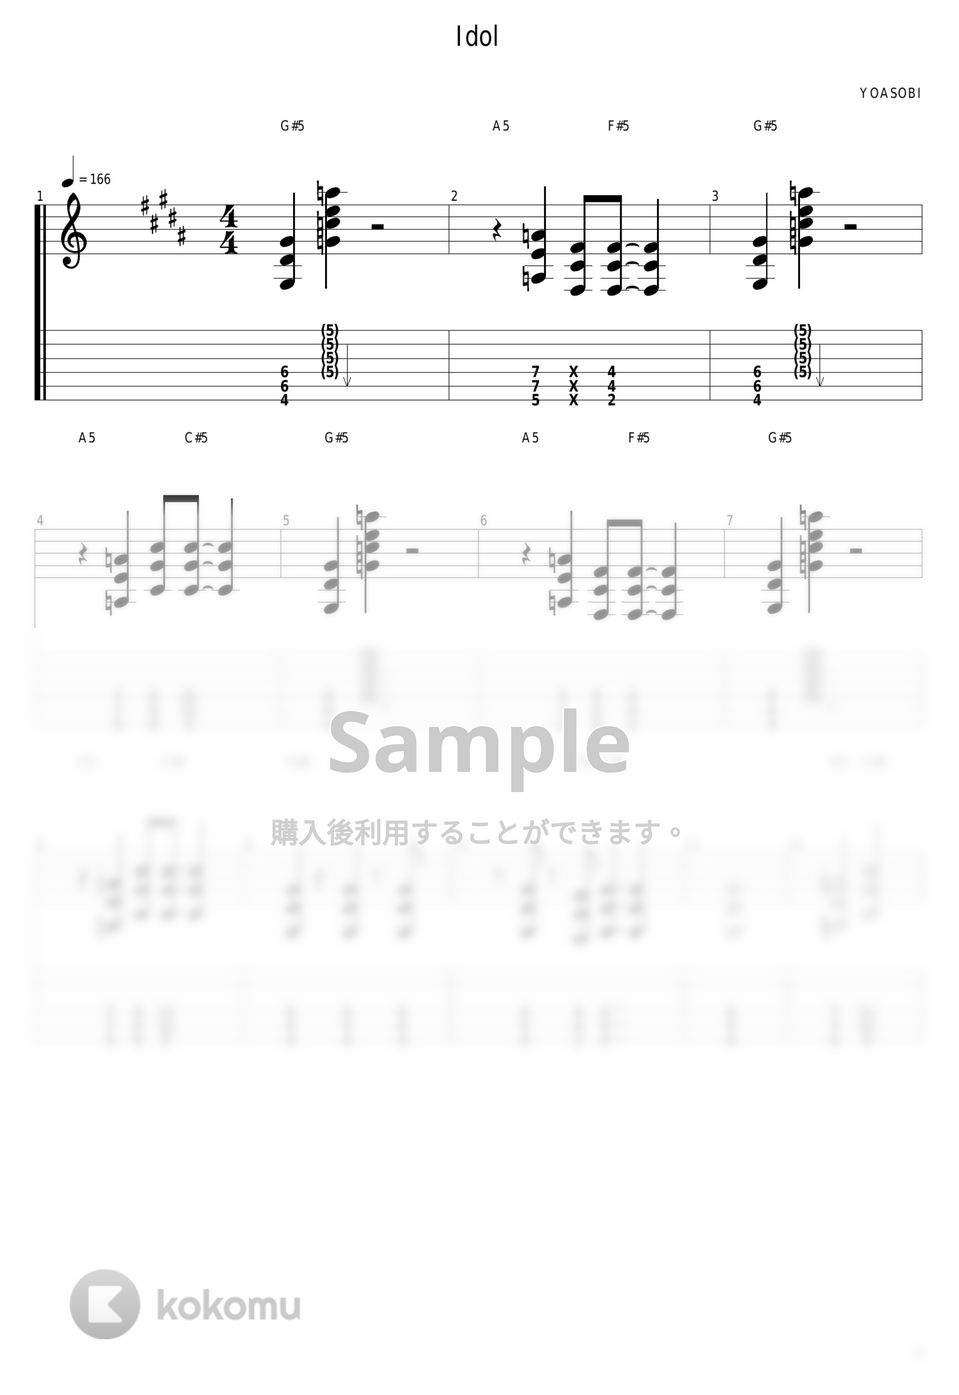 YOASOBI - アイドル by guitar cover with tab